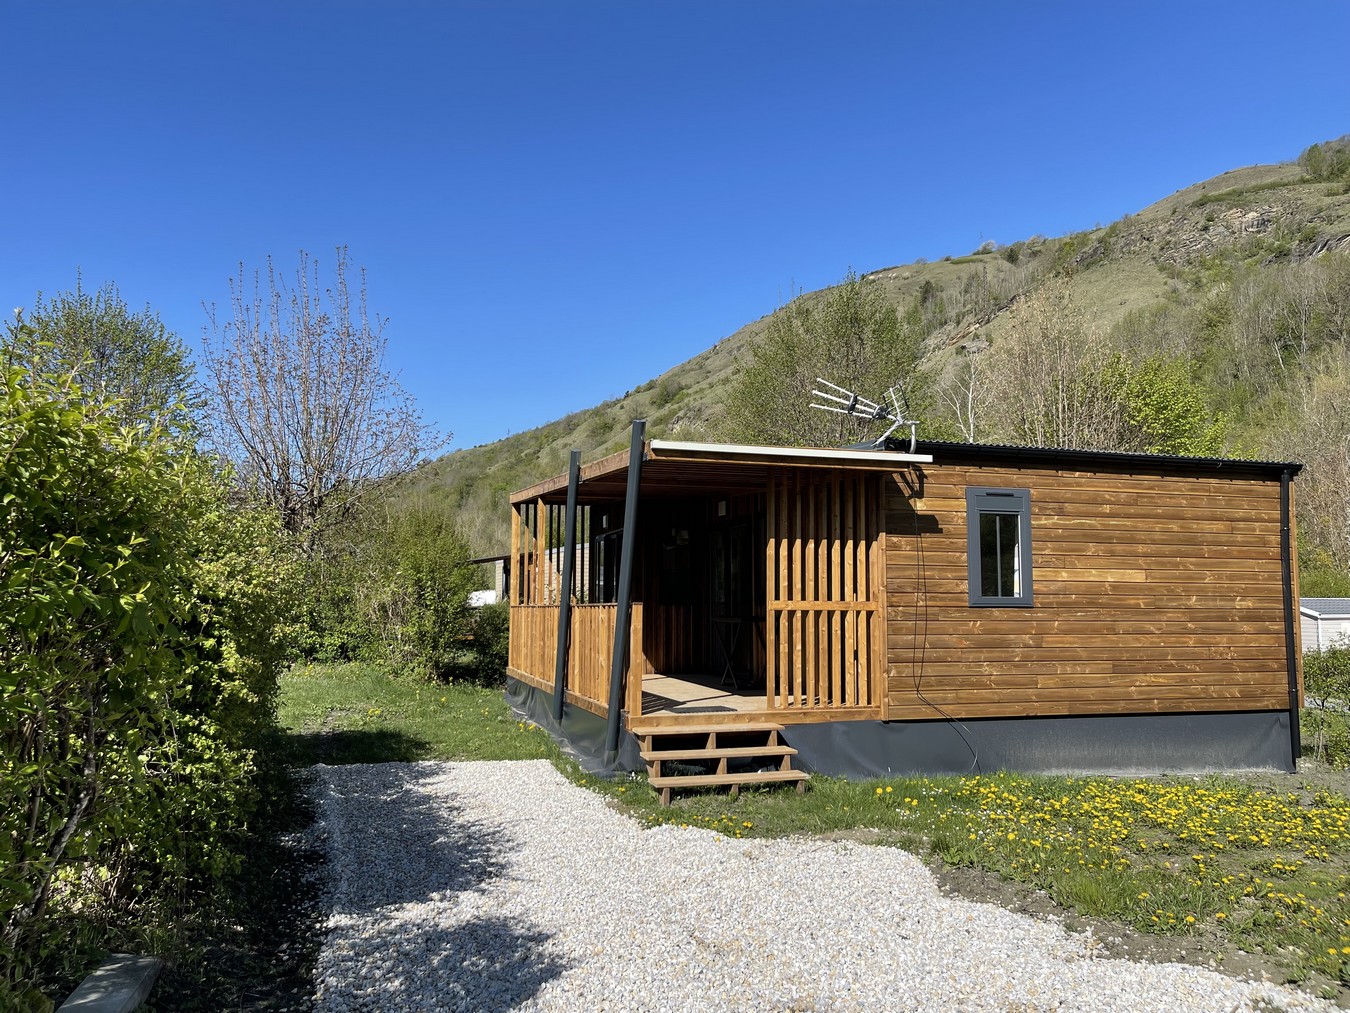 Huuraccommodatie - Chalet Premium 40M² (3 Kamers, Maximaal 6 Personen) - Camping Qualité l'Eden de la Vanoise